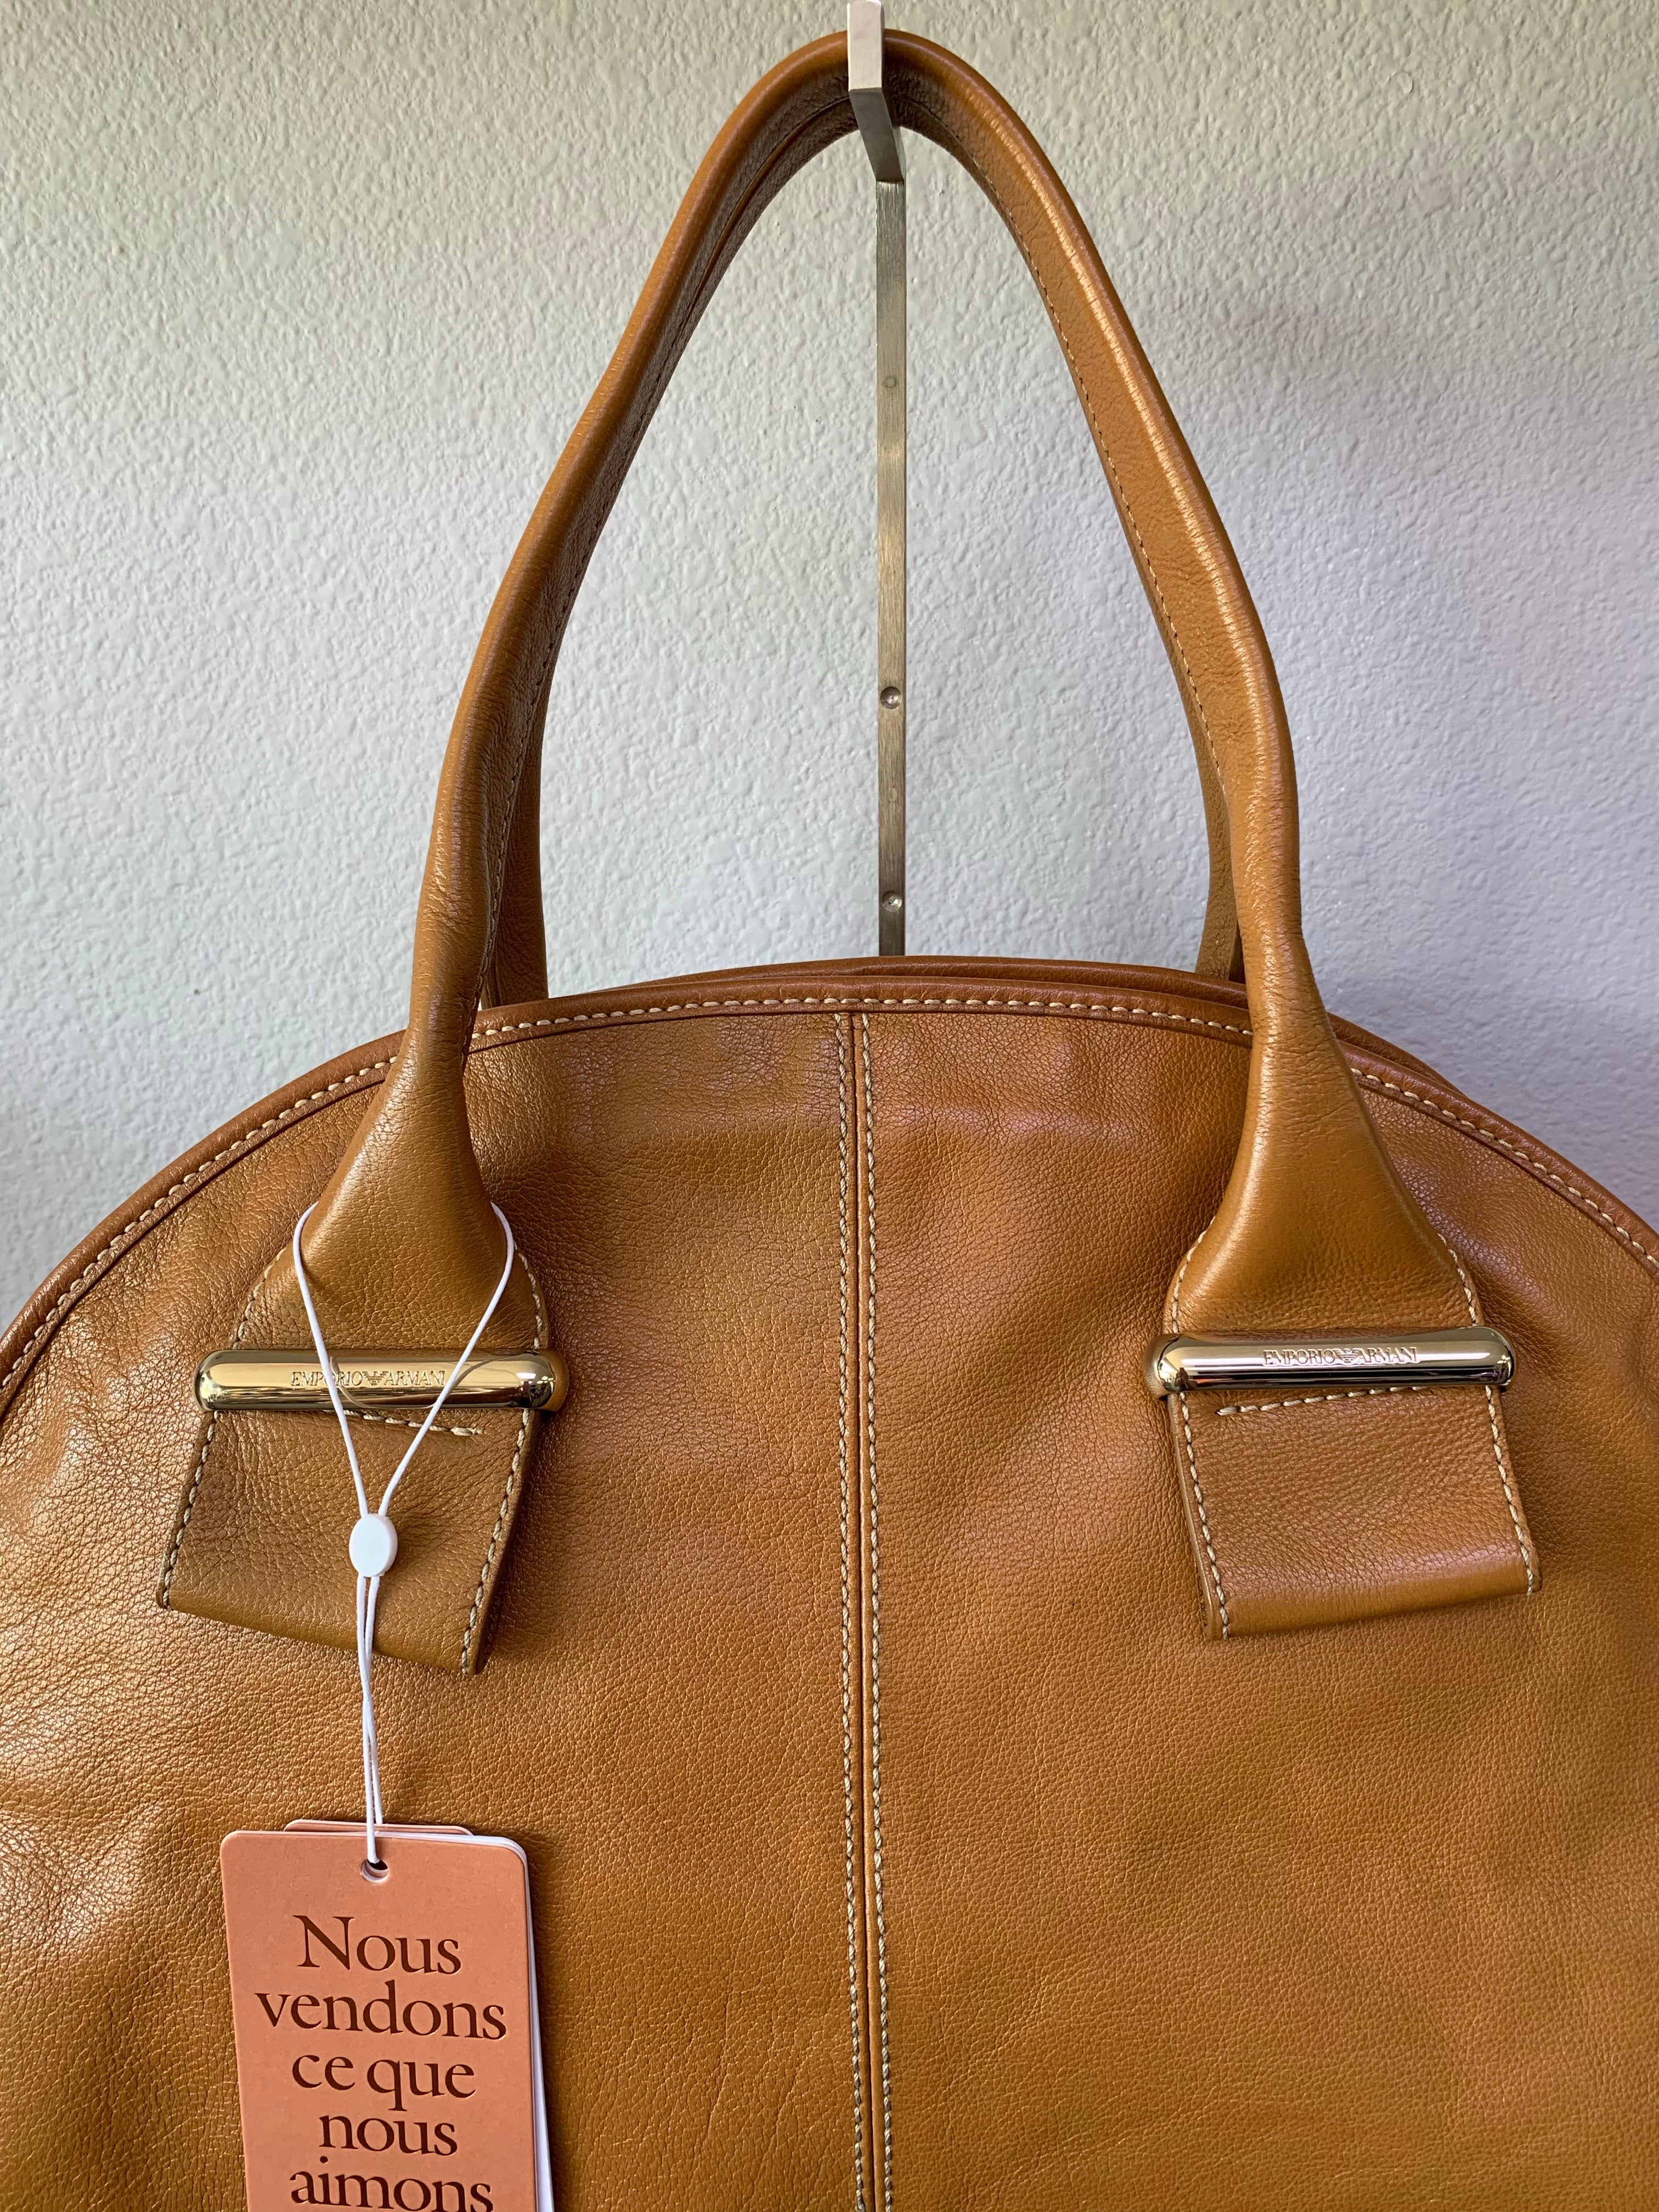 Emporio Armani Bags & Handbags for Women sale - discounted price | FASHIOLA  INDIA